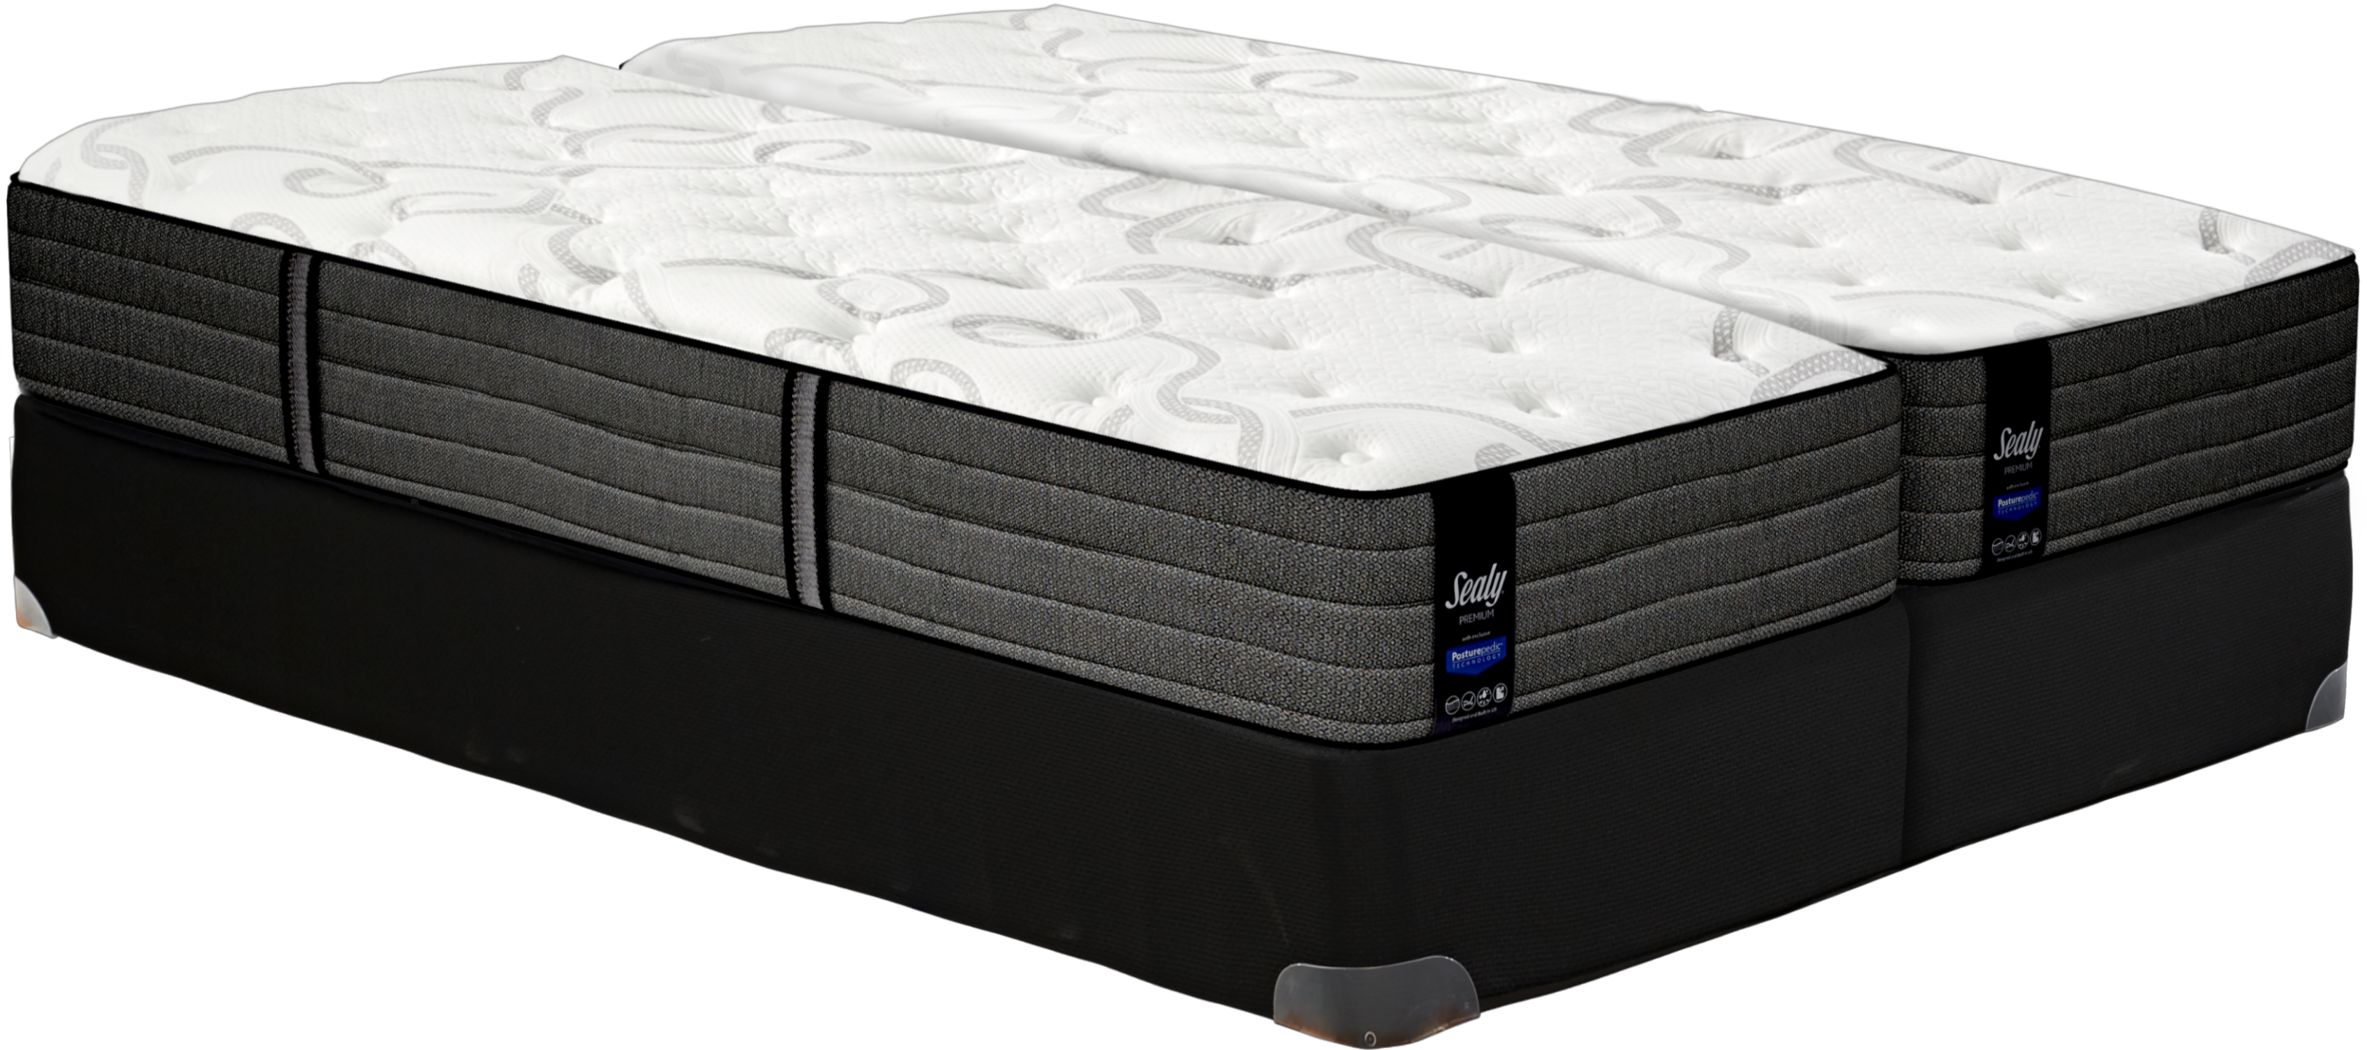 low profile king mattress set